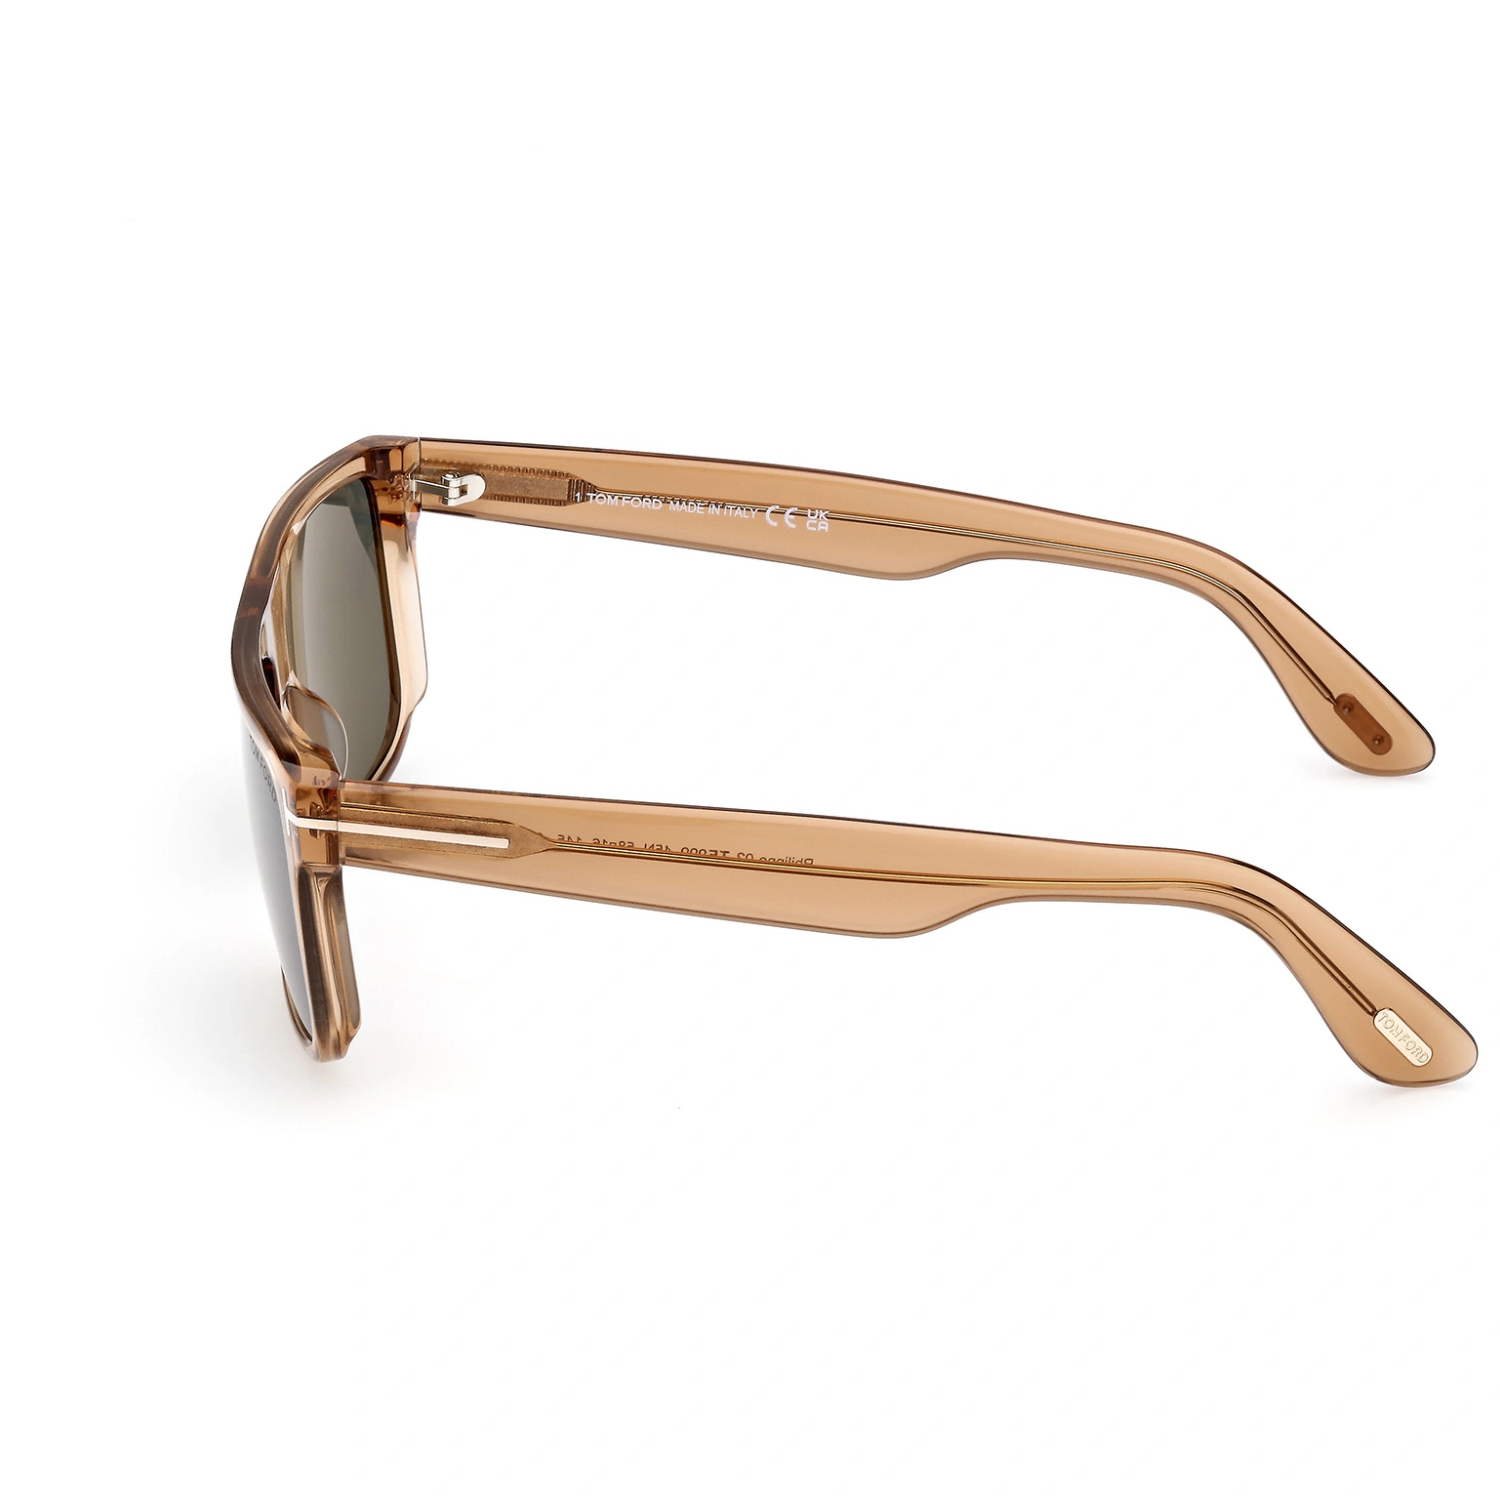 Tom Ford Sunglasses Tom Ford Sunglasses FT0999 45N 58mm Philippe Eyeglasses Eyewear UK USA Australia 